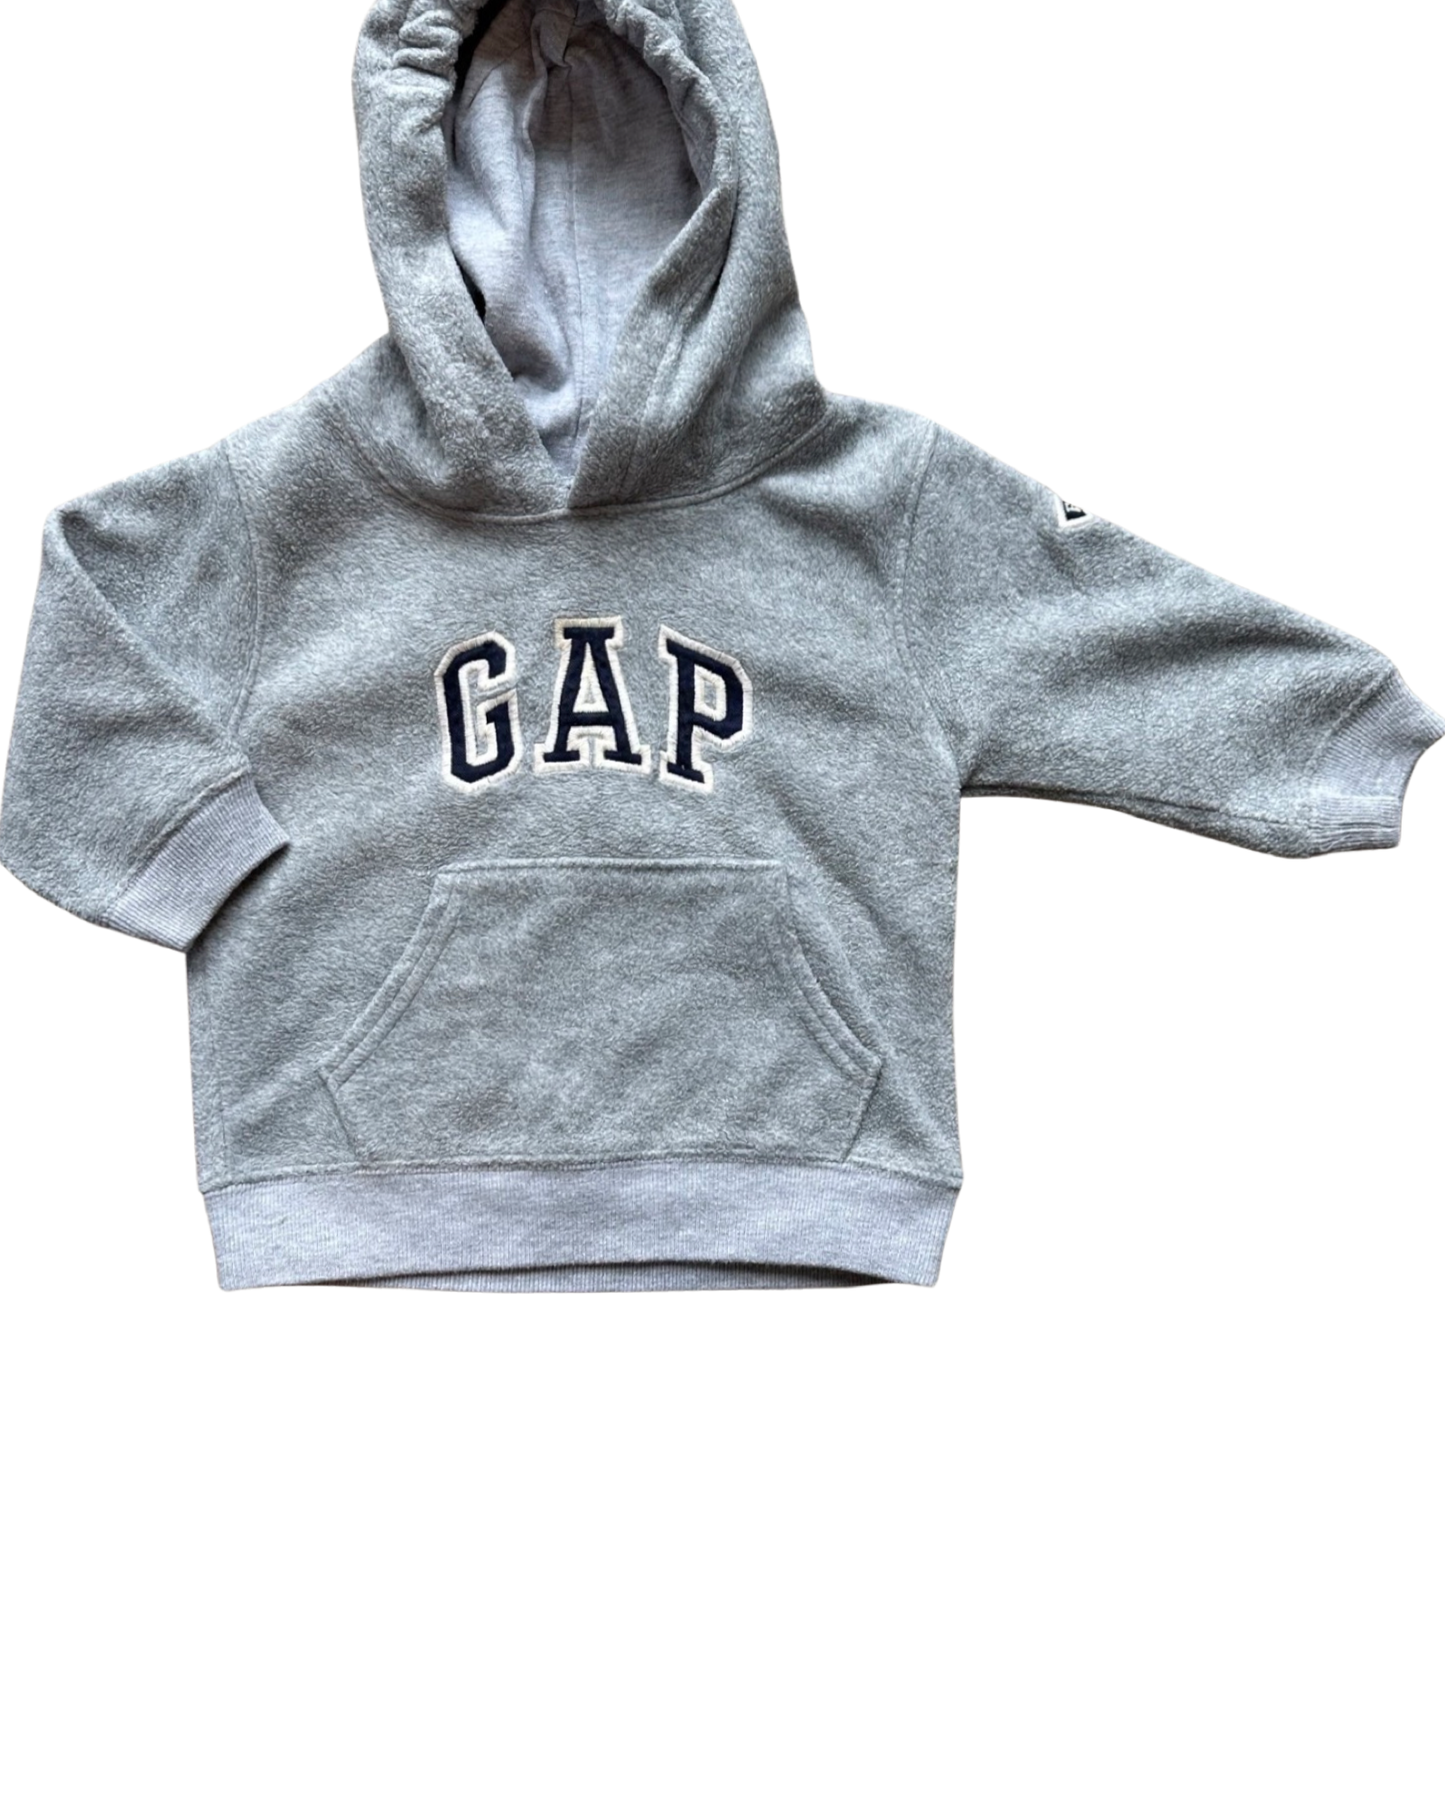 Baby Gap classic logo fleece hoodie in grey (size 6-12mths)